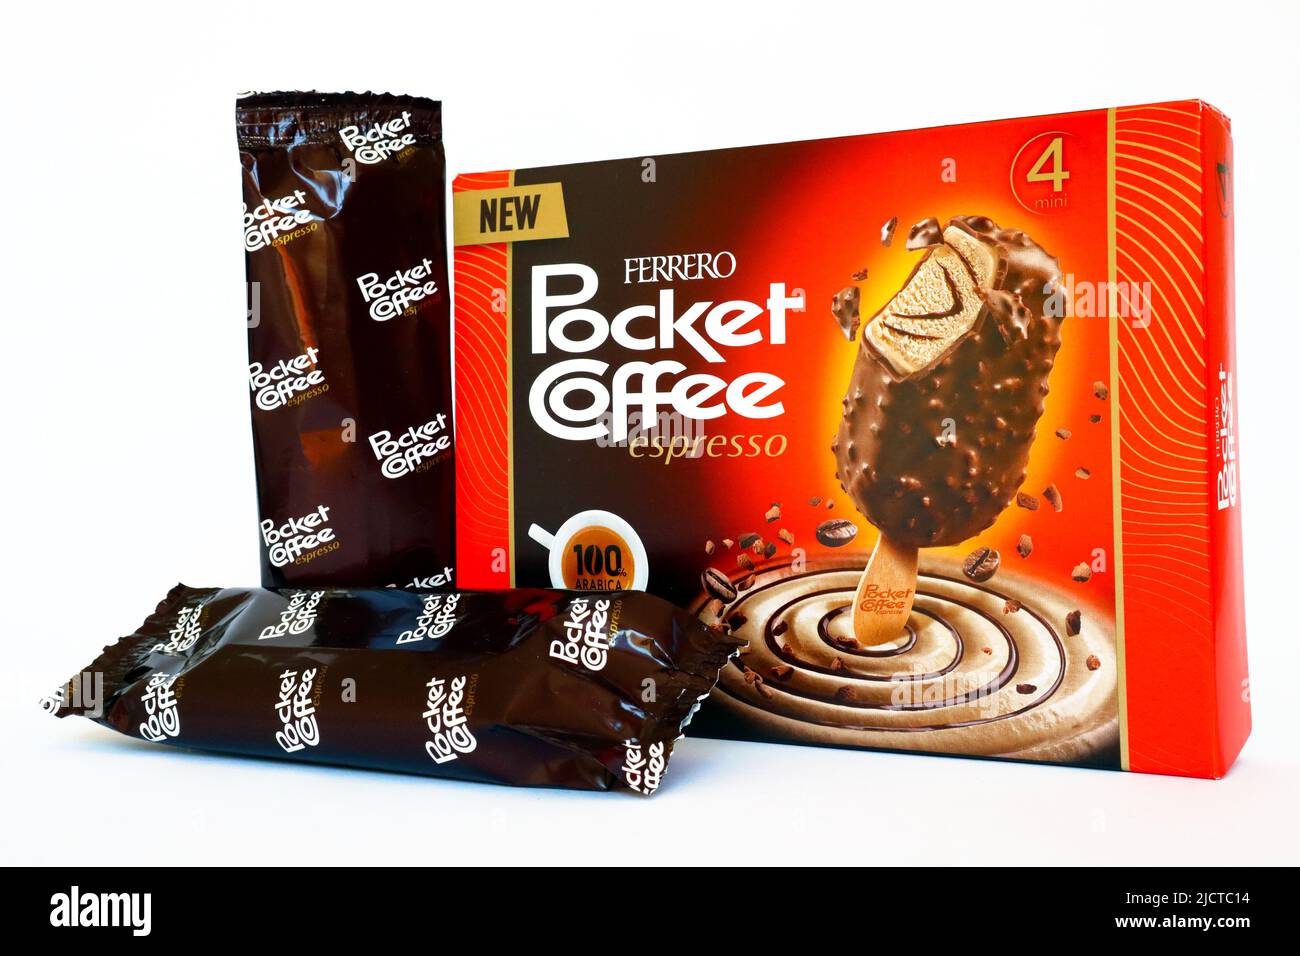 Pack of Pocket Coffee Chocolate Brand Ferrero Editorial Stock